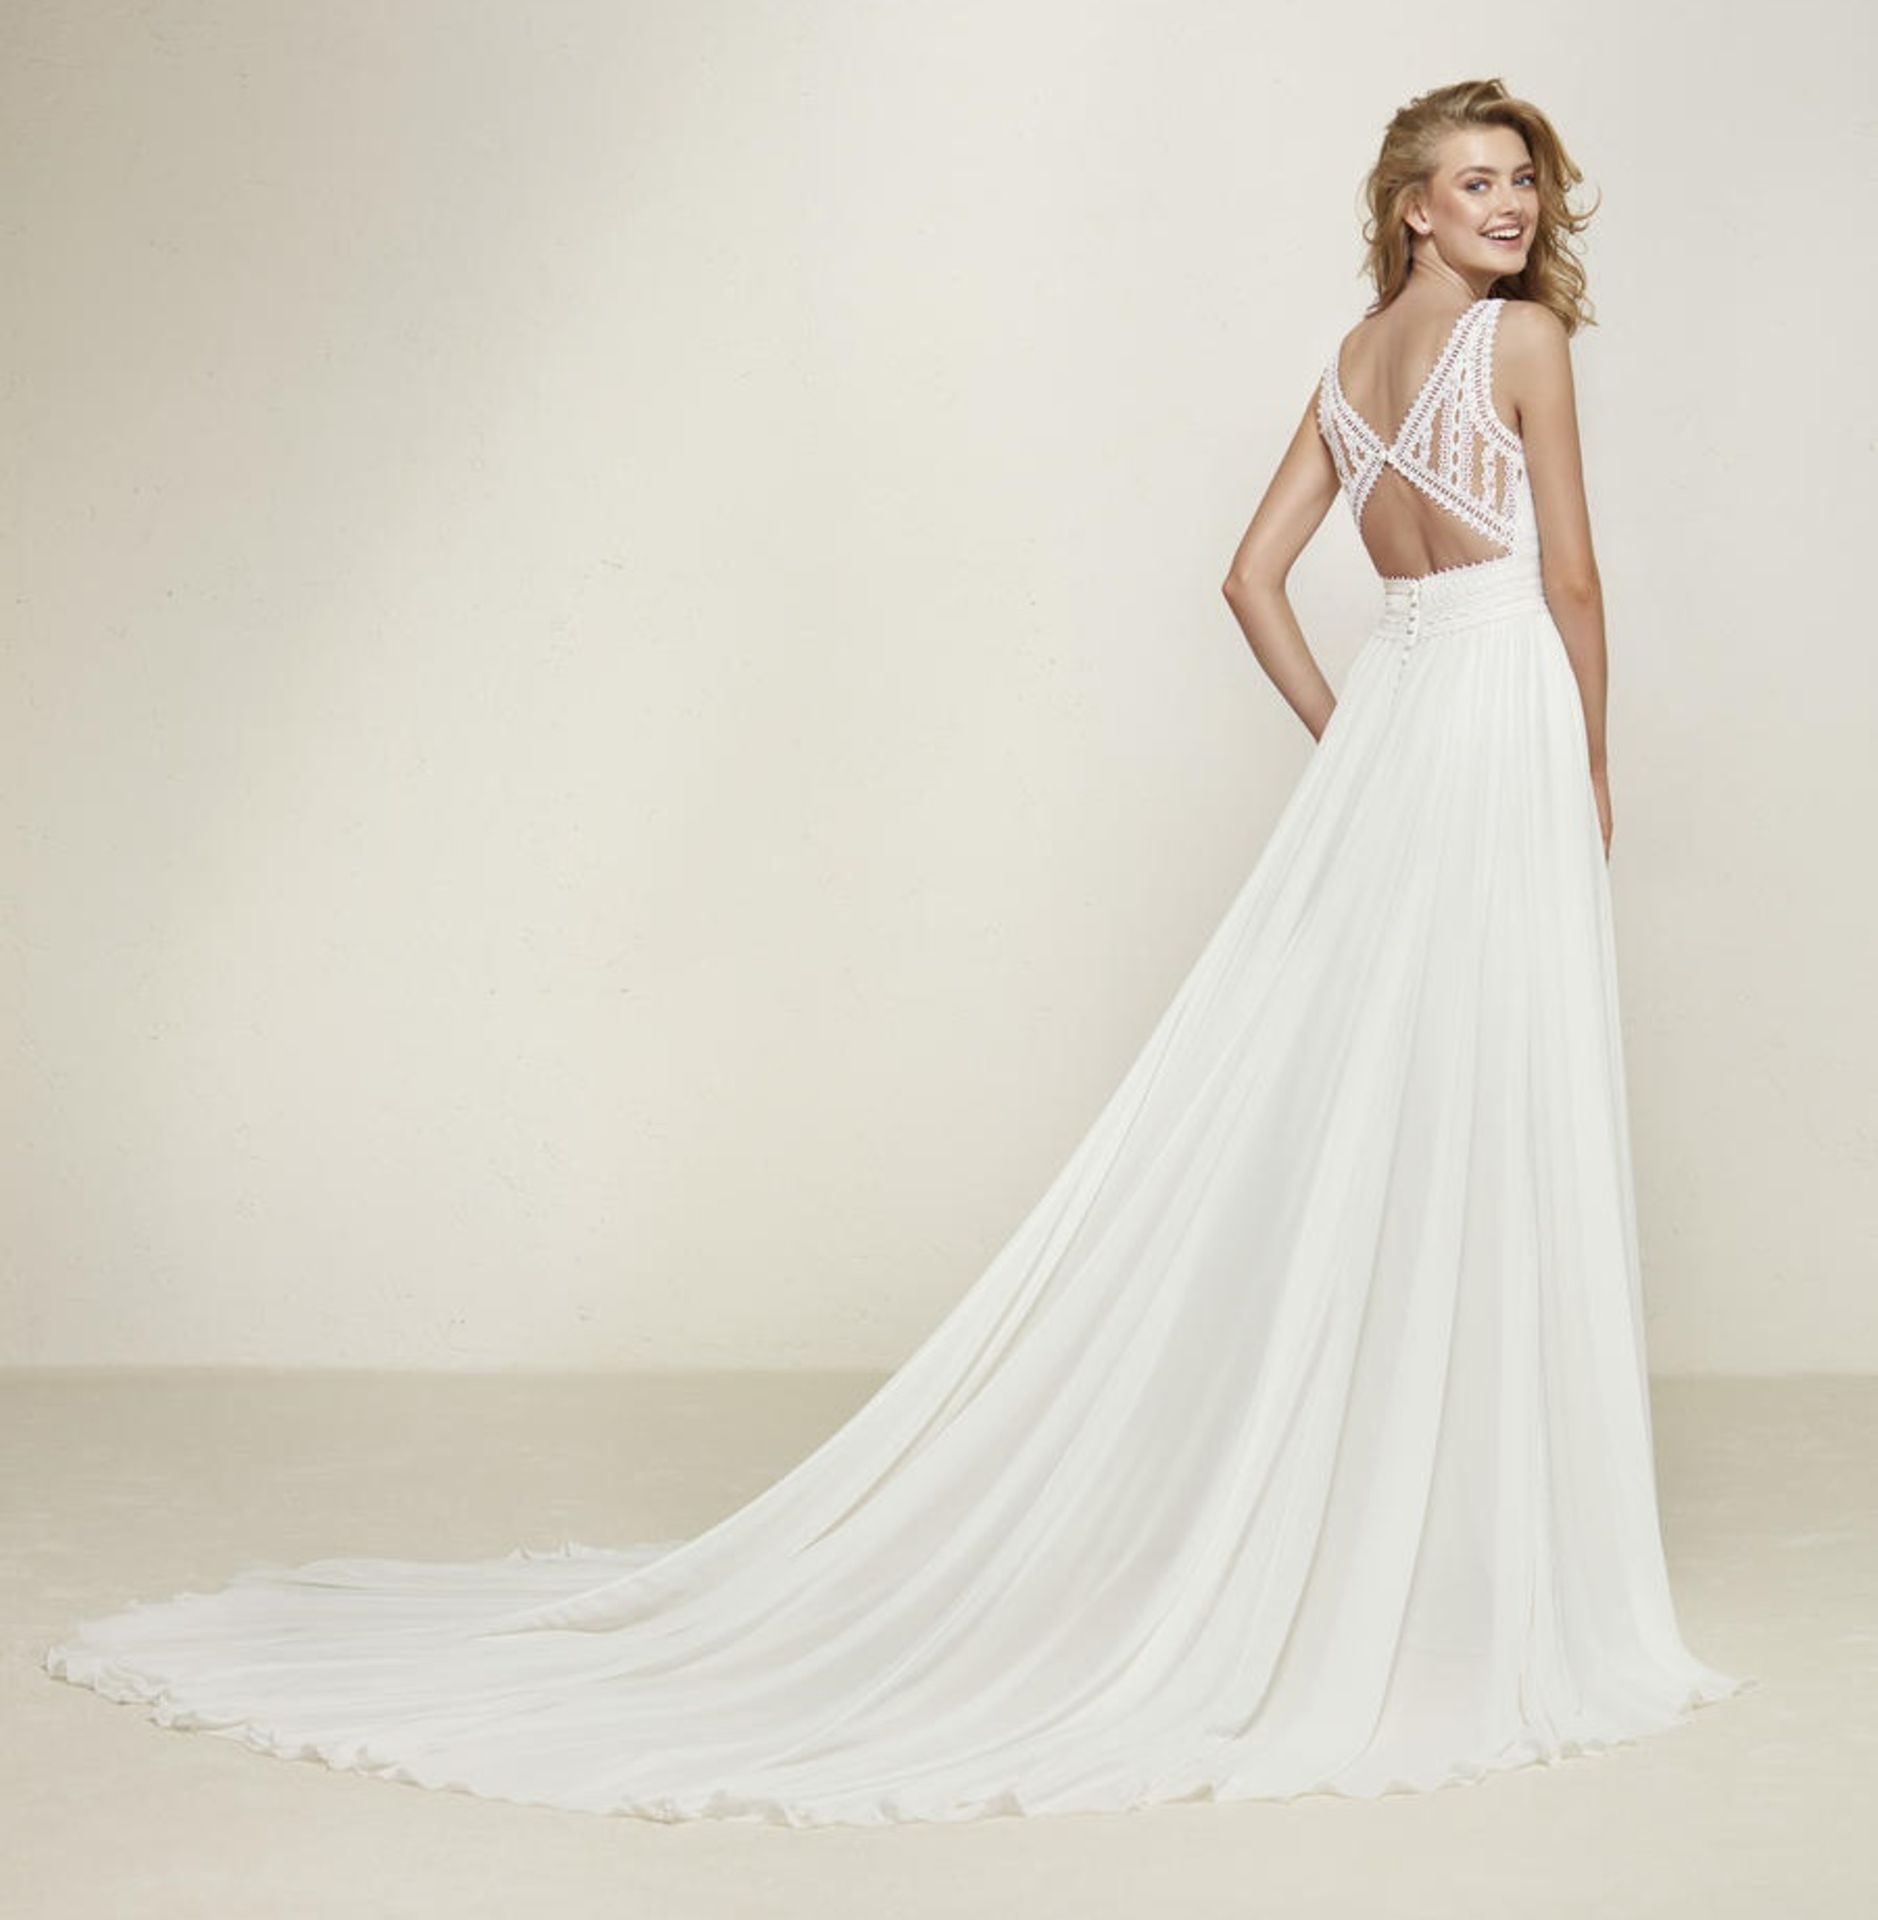 1 x PRONOVIAS 'Dramia' Designer Crocheted Lace Wedding Dress Bridal Gown, With Chiffon Gathered - Image 2 of 20